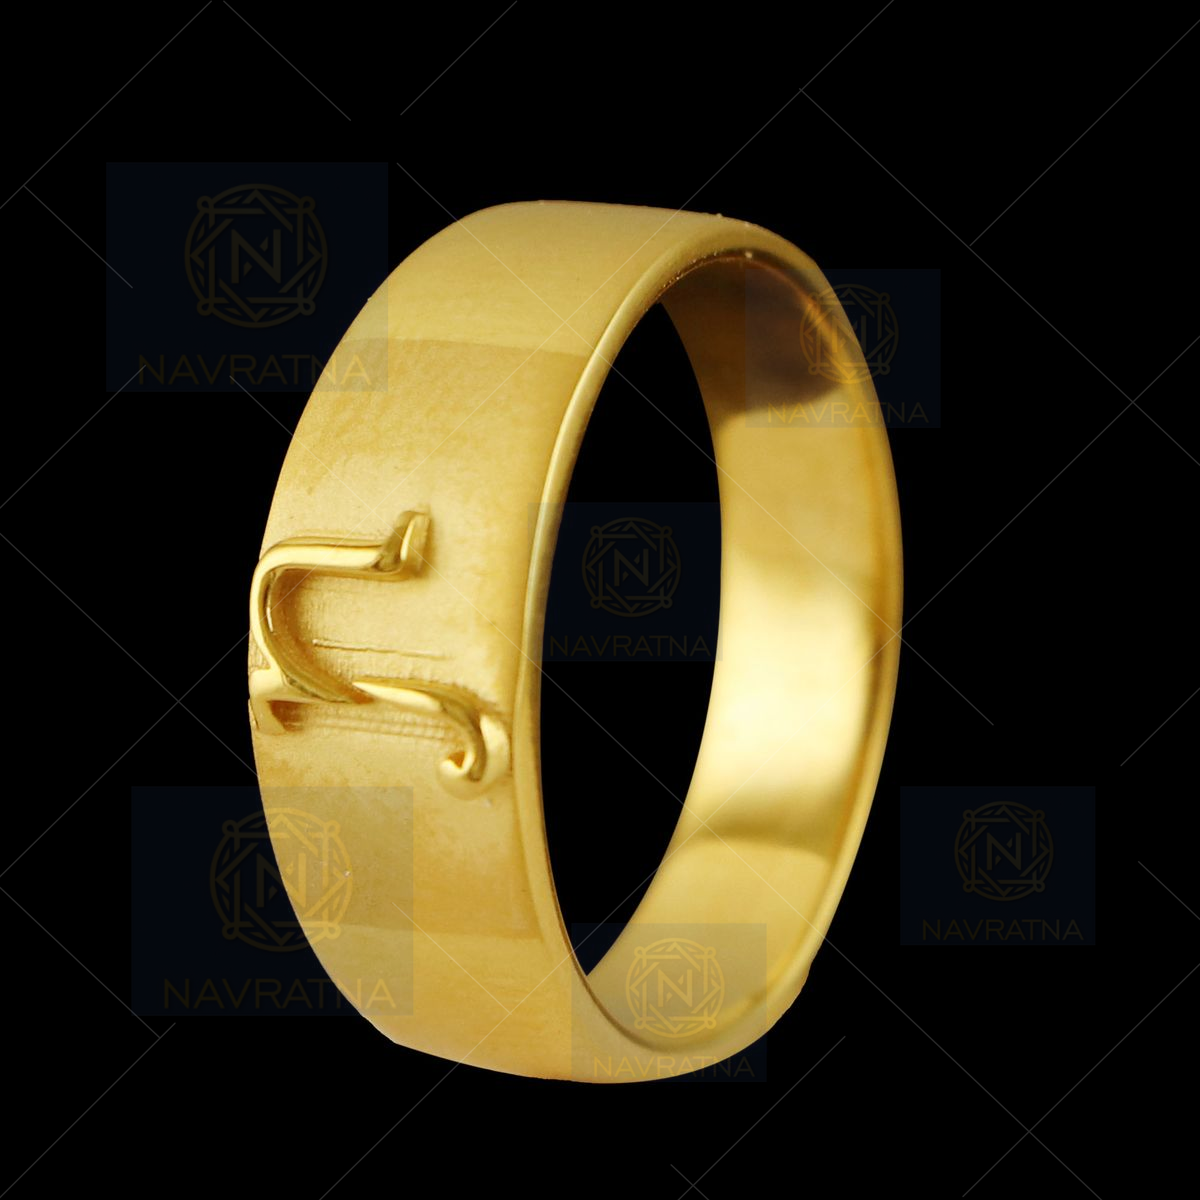 Buy 2 Gram Gold Rings Online | CaratLane